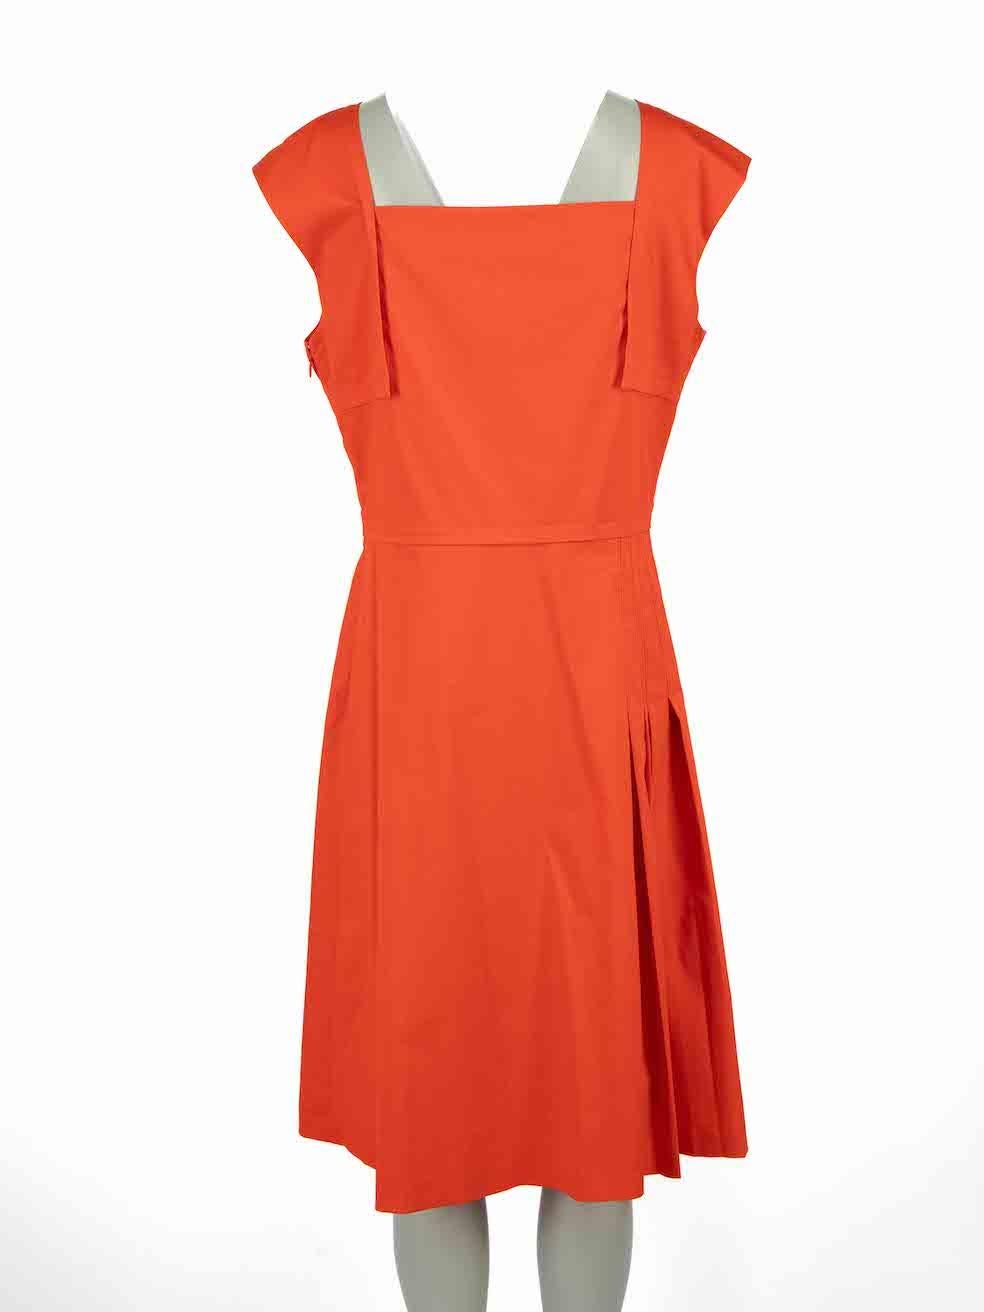 Salvatore Ferragamo Orange Knee Length Dress Size XL In Excellent Condition For Sale In London, GB